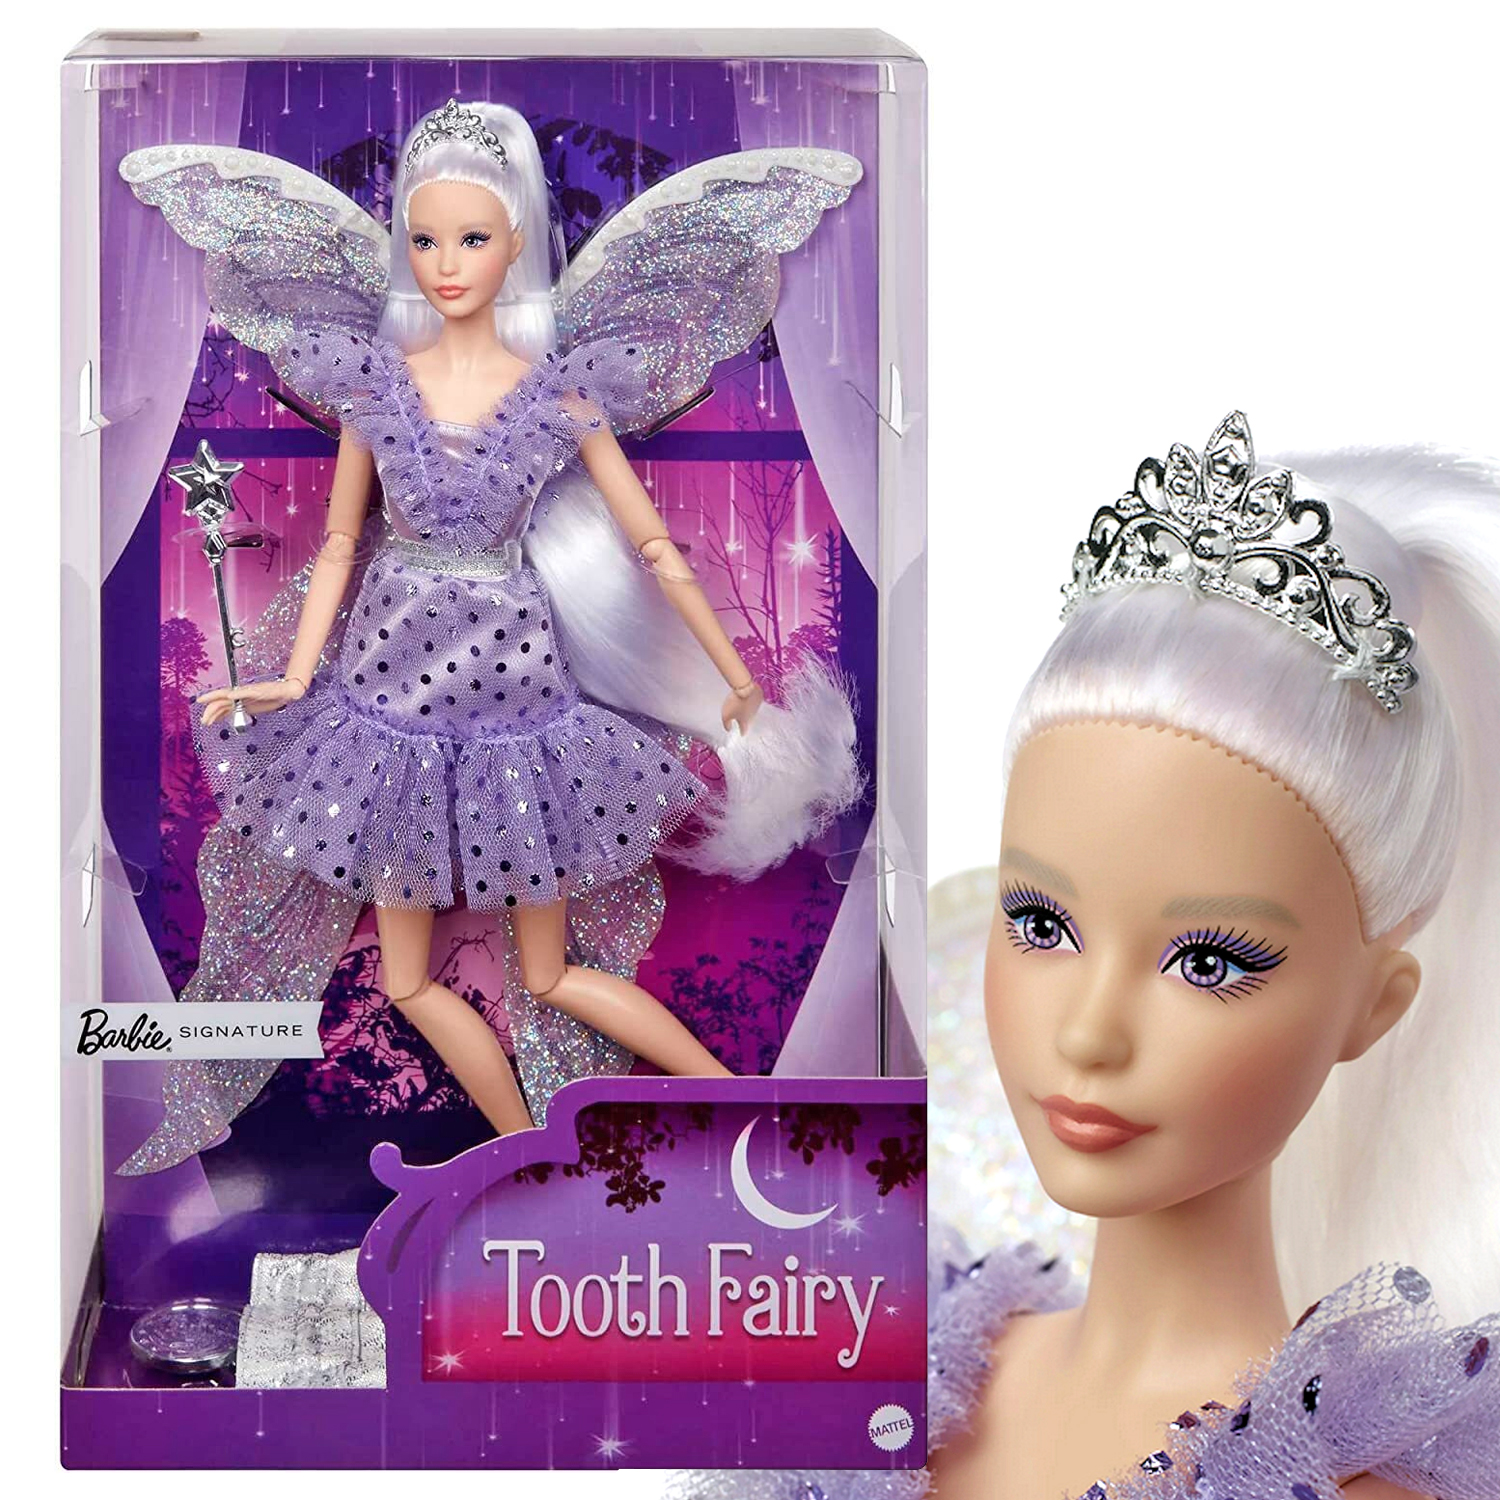 Кукла коллекционная Barbie Фея Barbie Signature Tooth Fairy